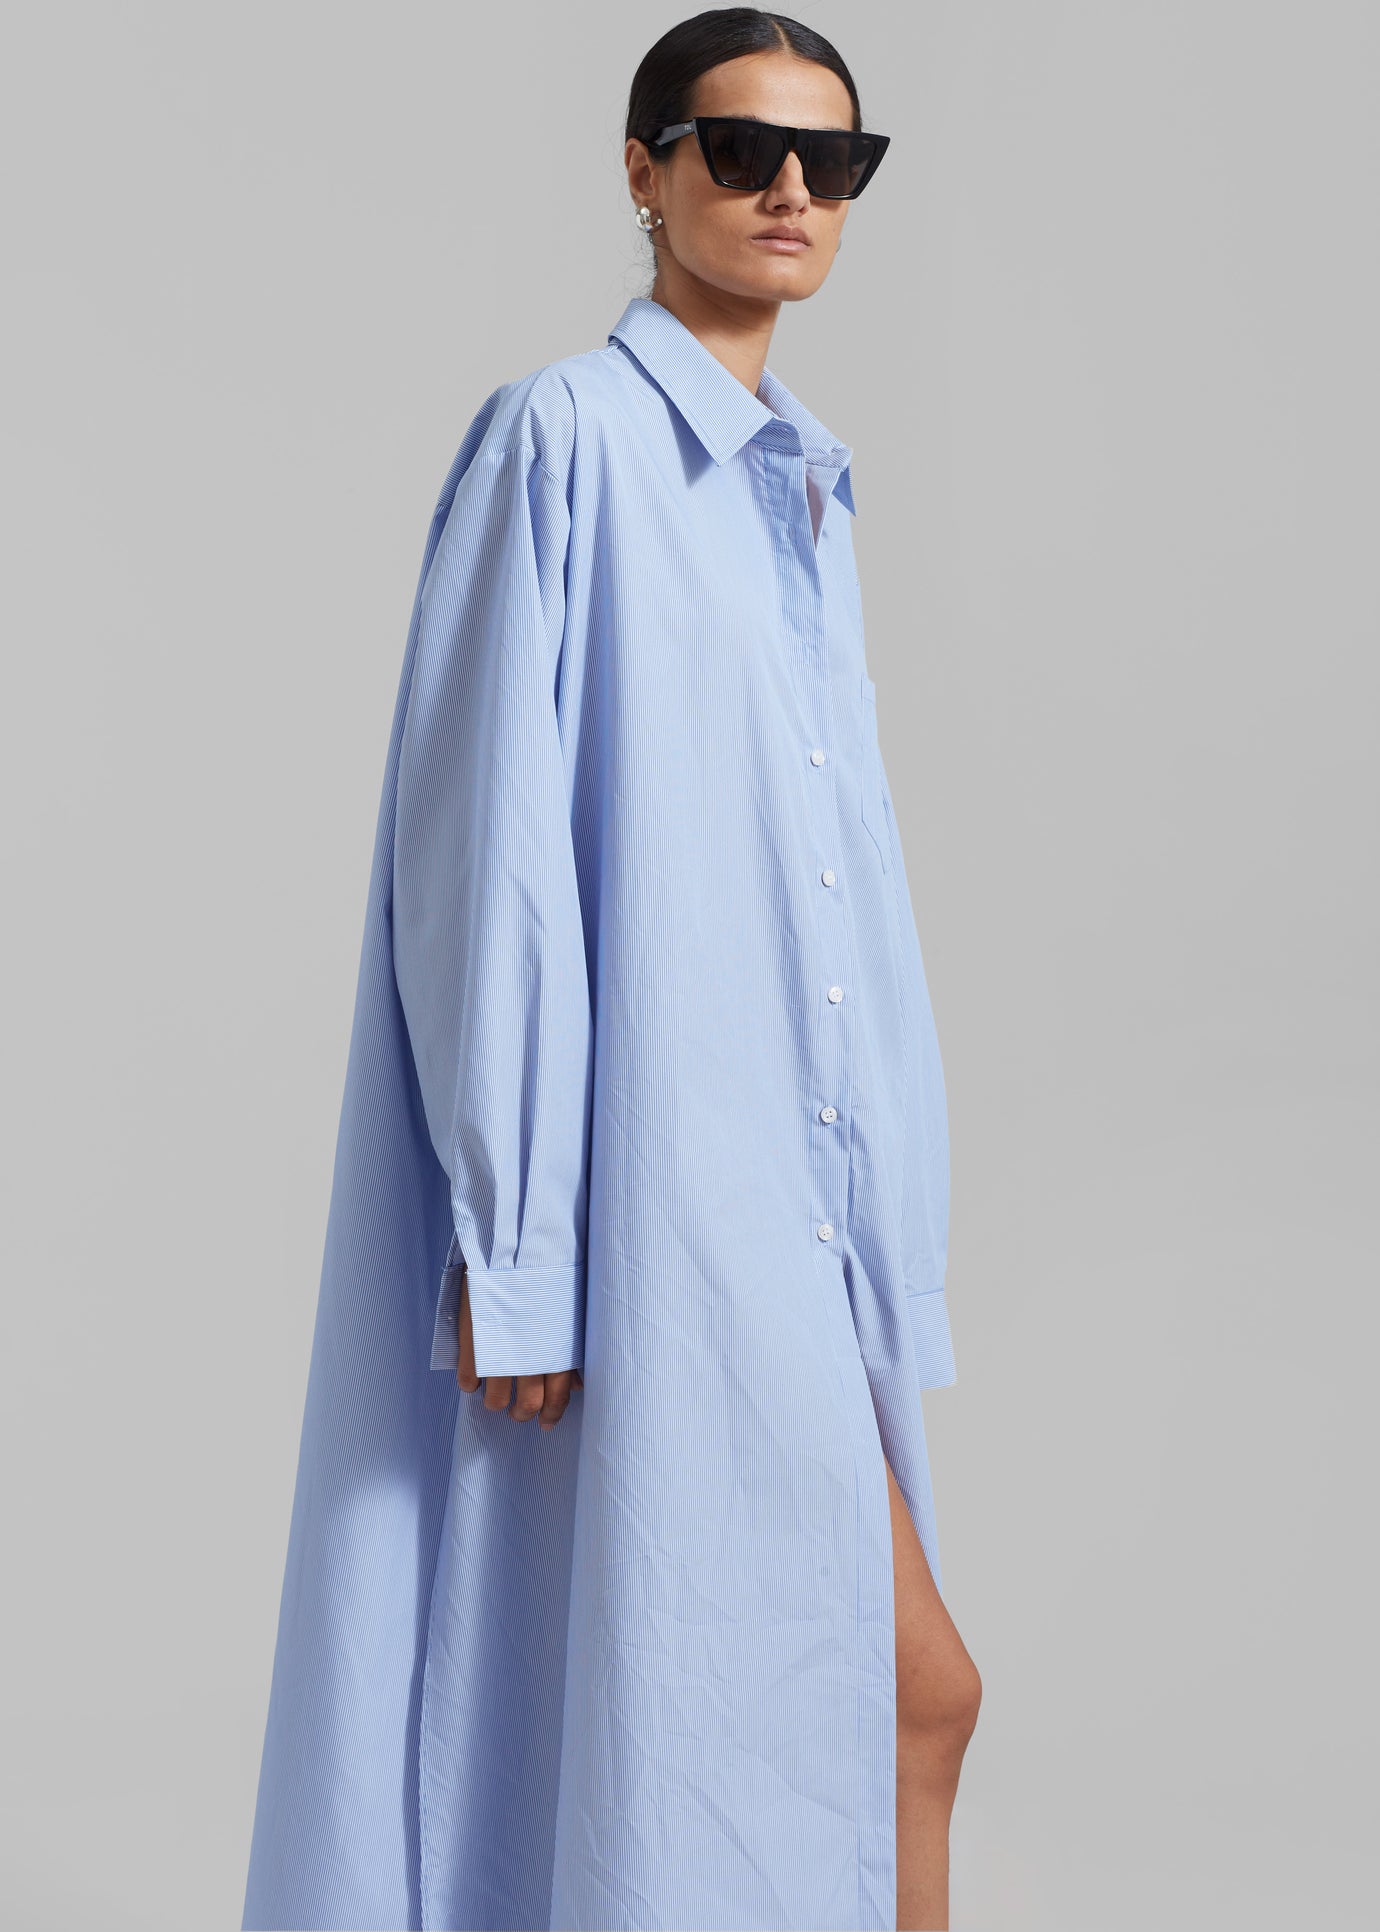 Avery Shirt Dress - Blue Stripe